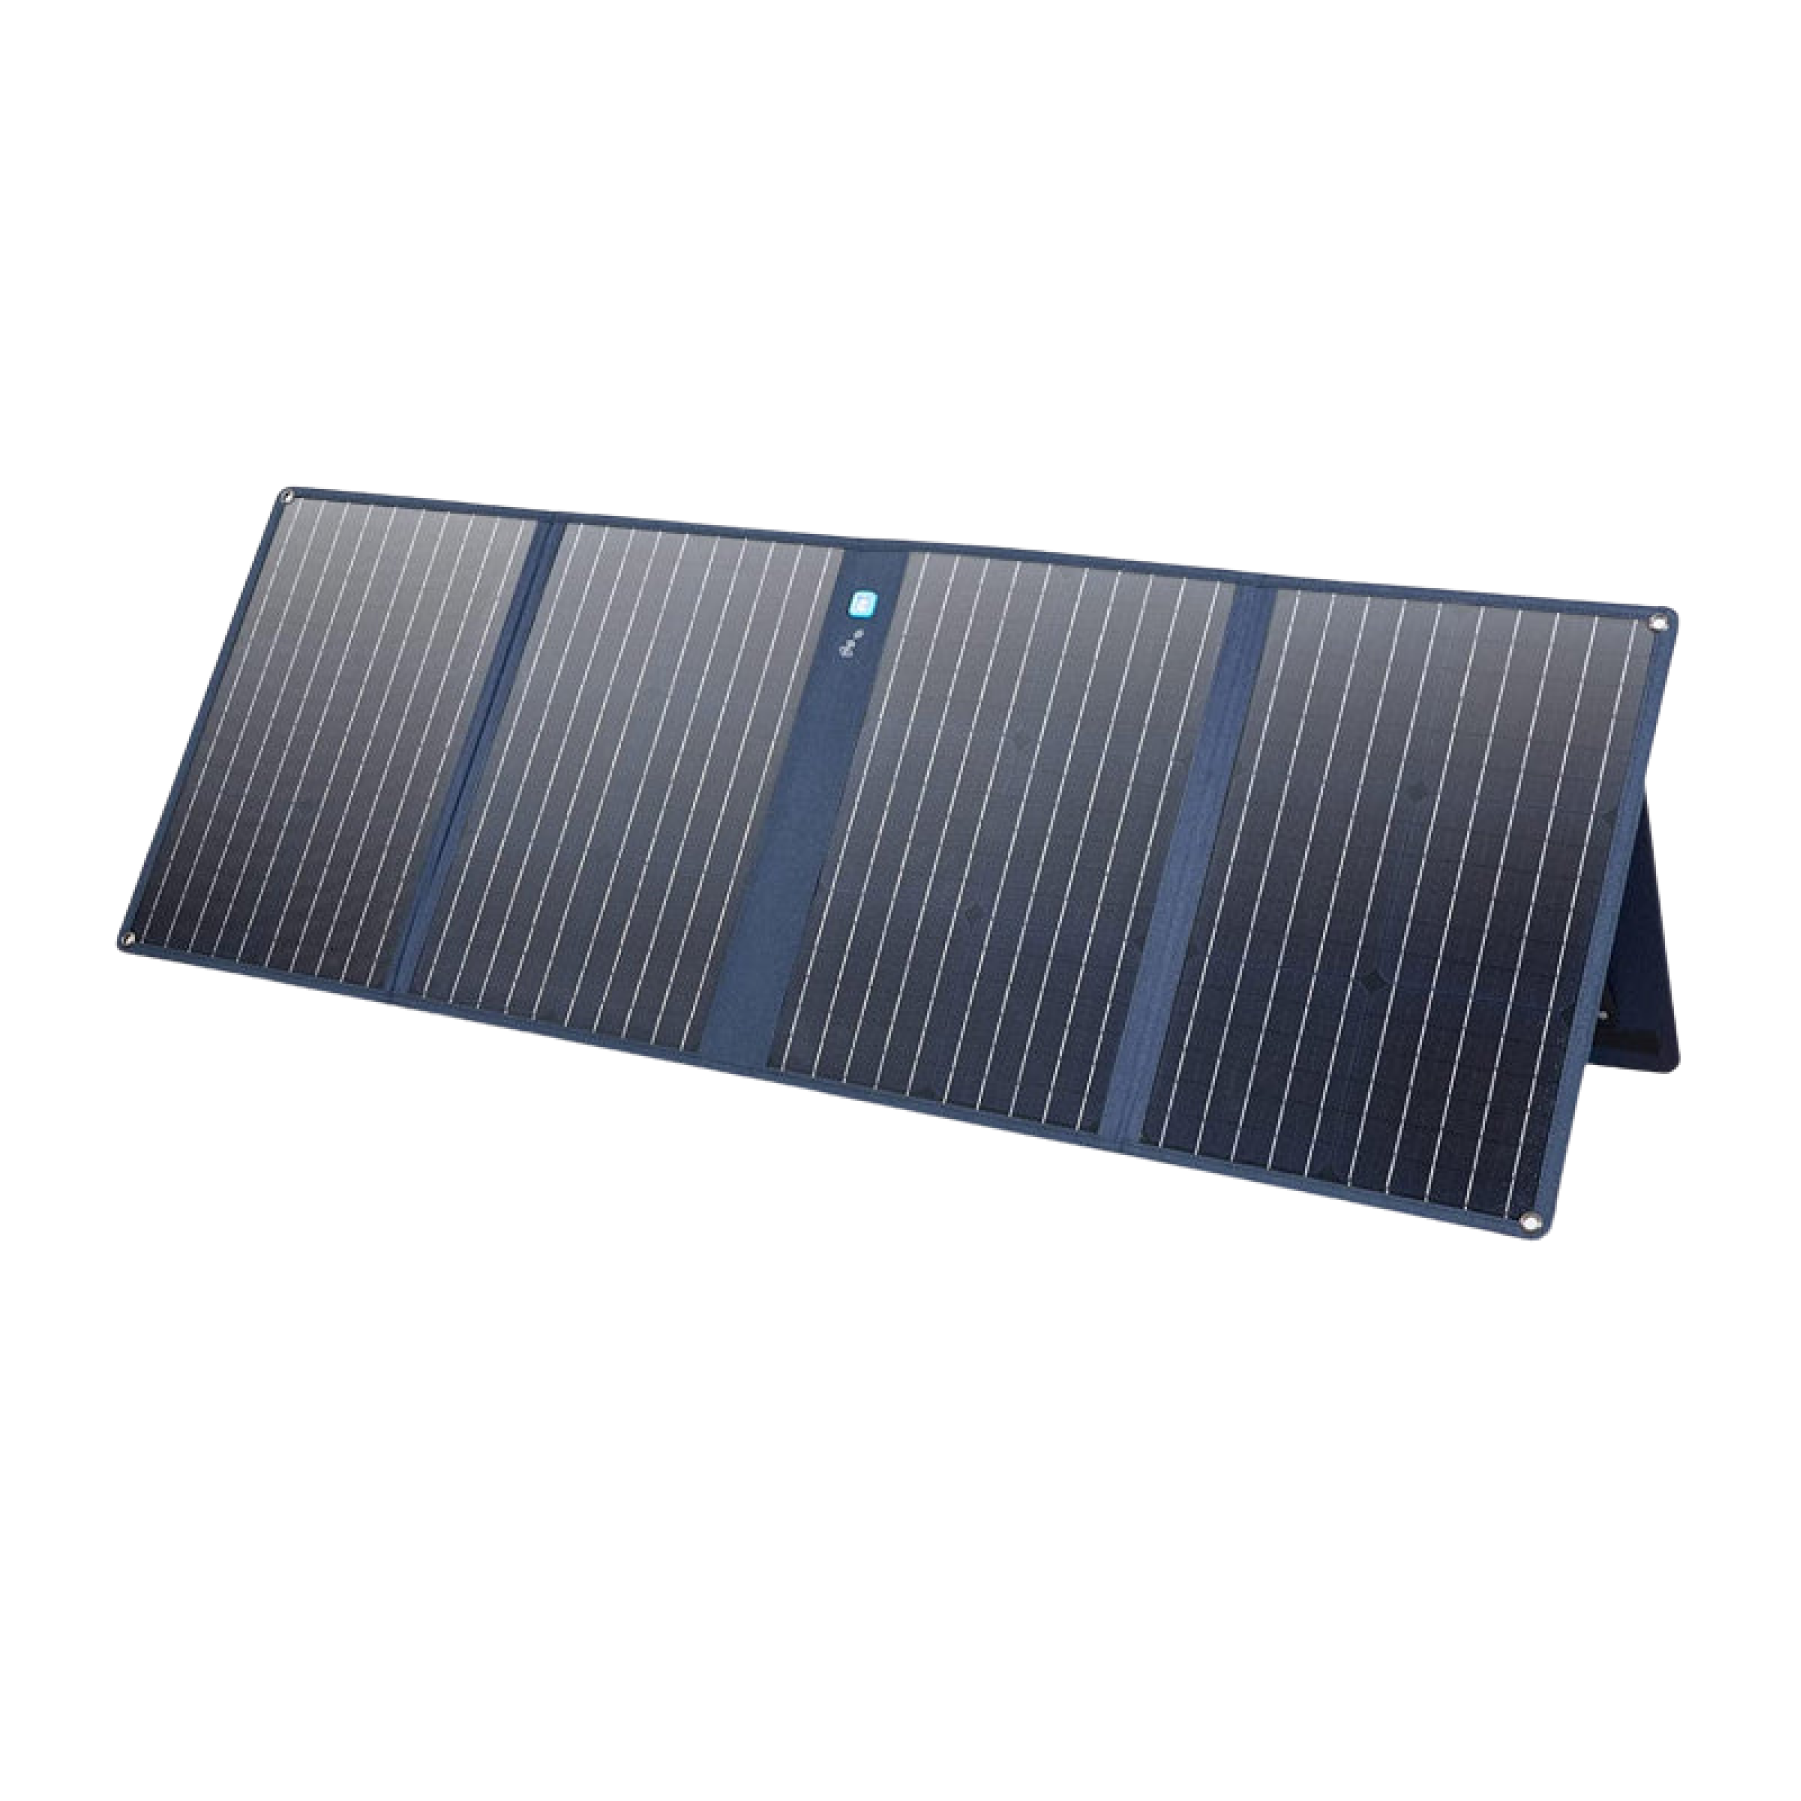 Anker 555 Solar Generator (PowerHouse 1024Wh 1000W with Solar